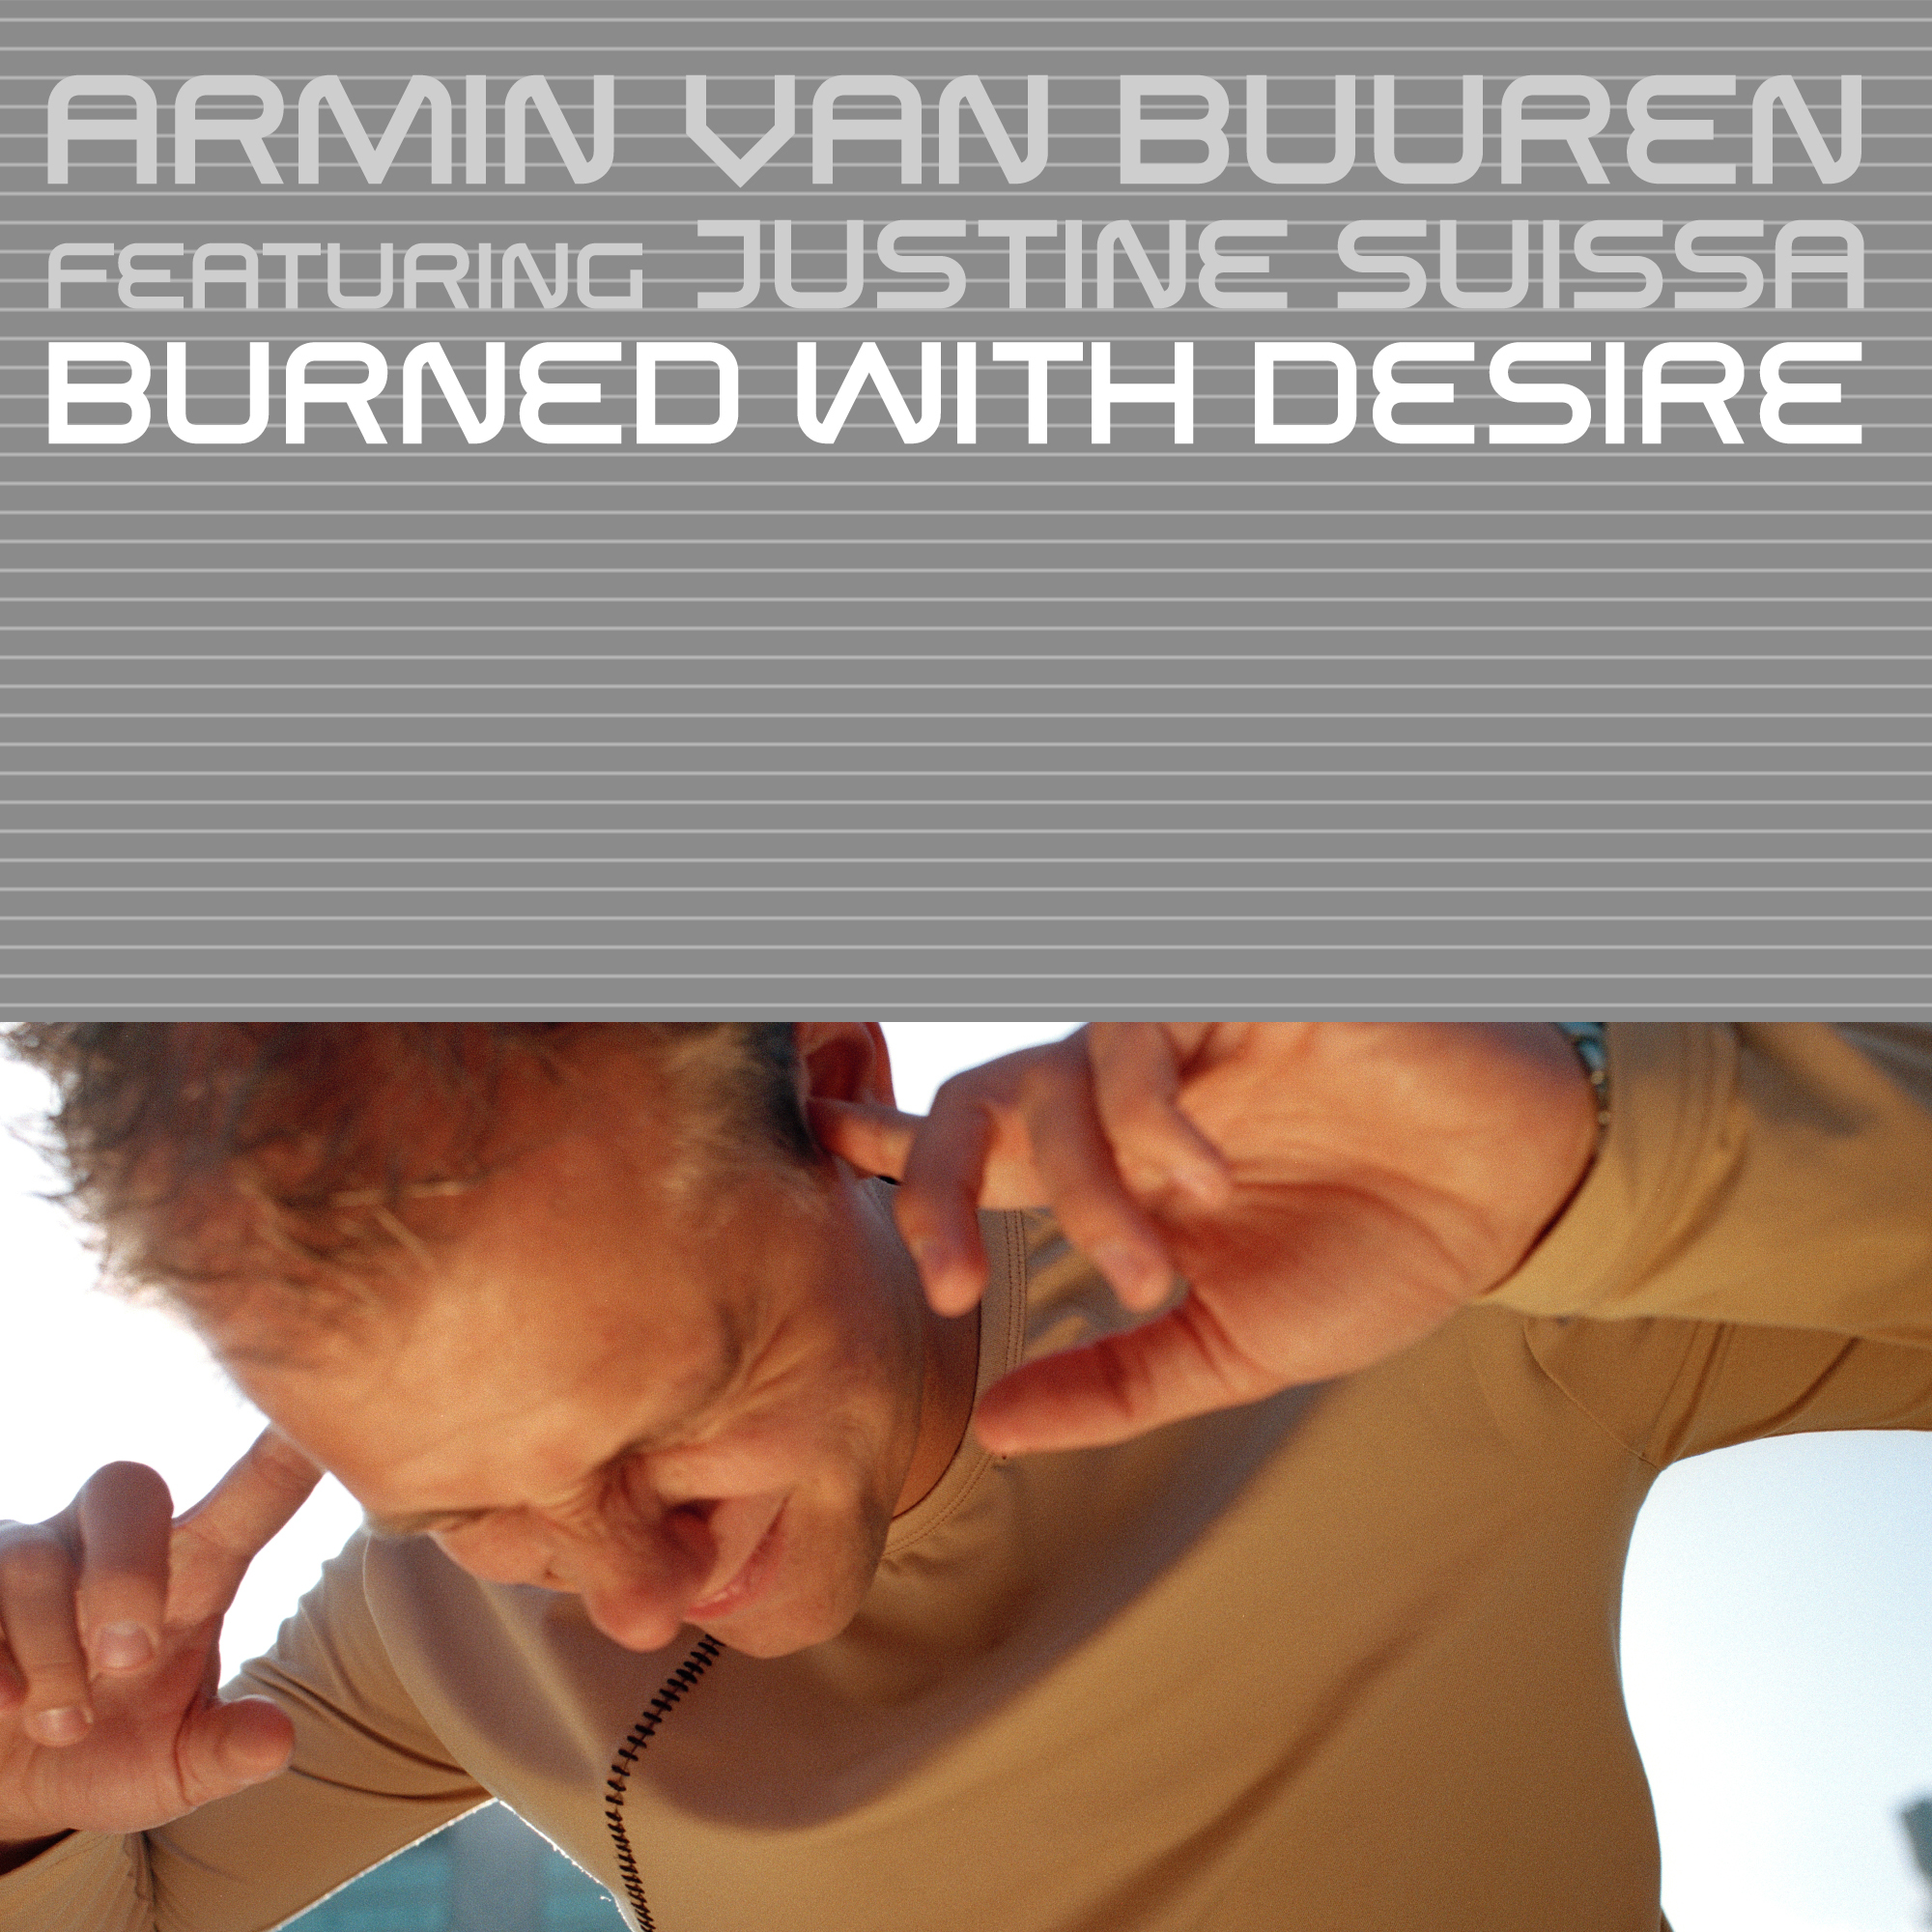 Burned With Desire (Classic Bonus Track) (Rising Star Vocal Mix)